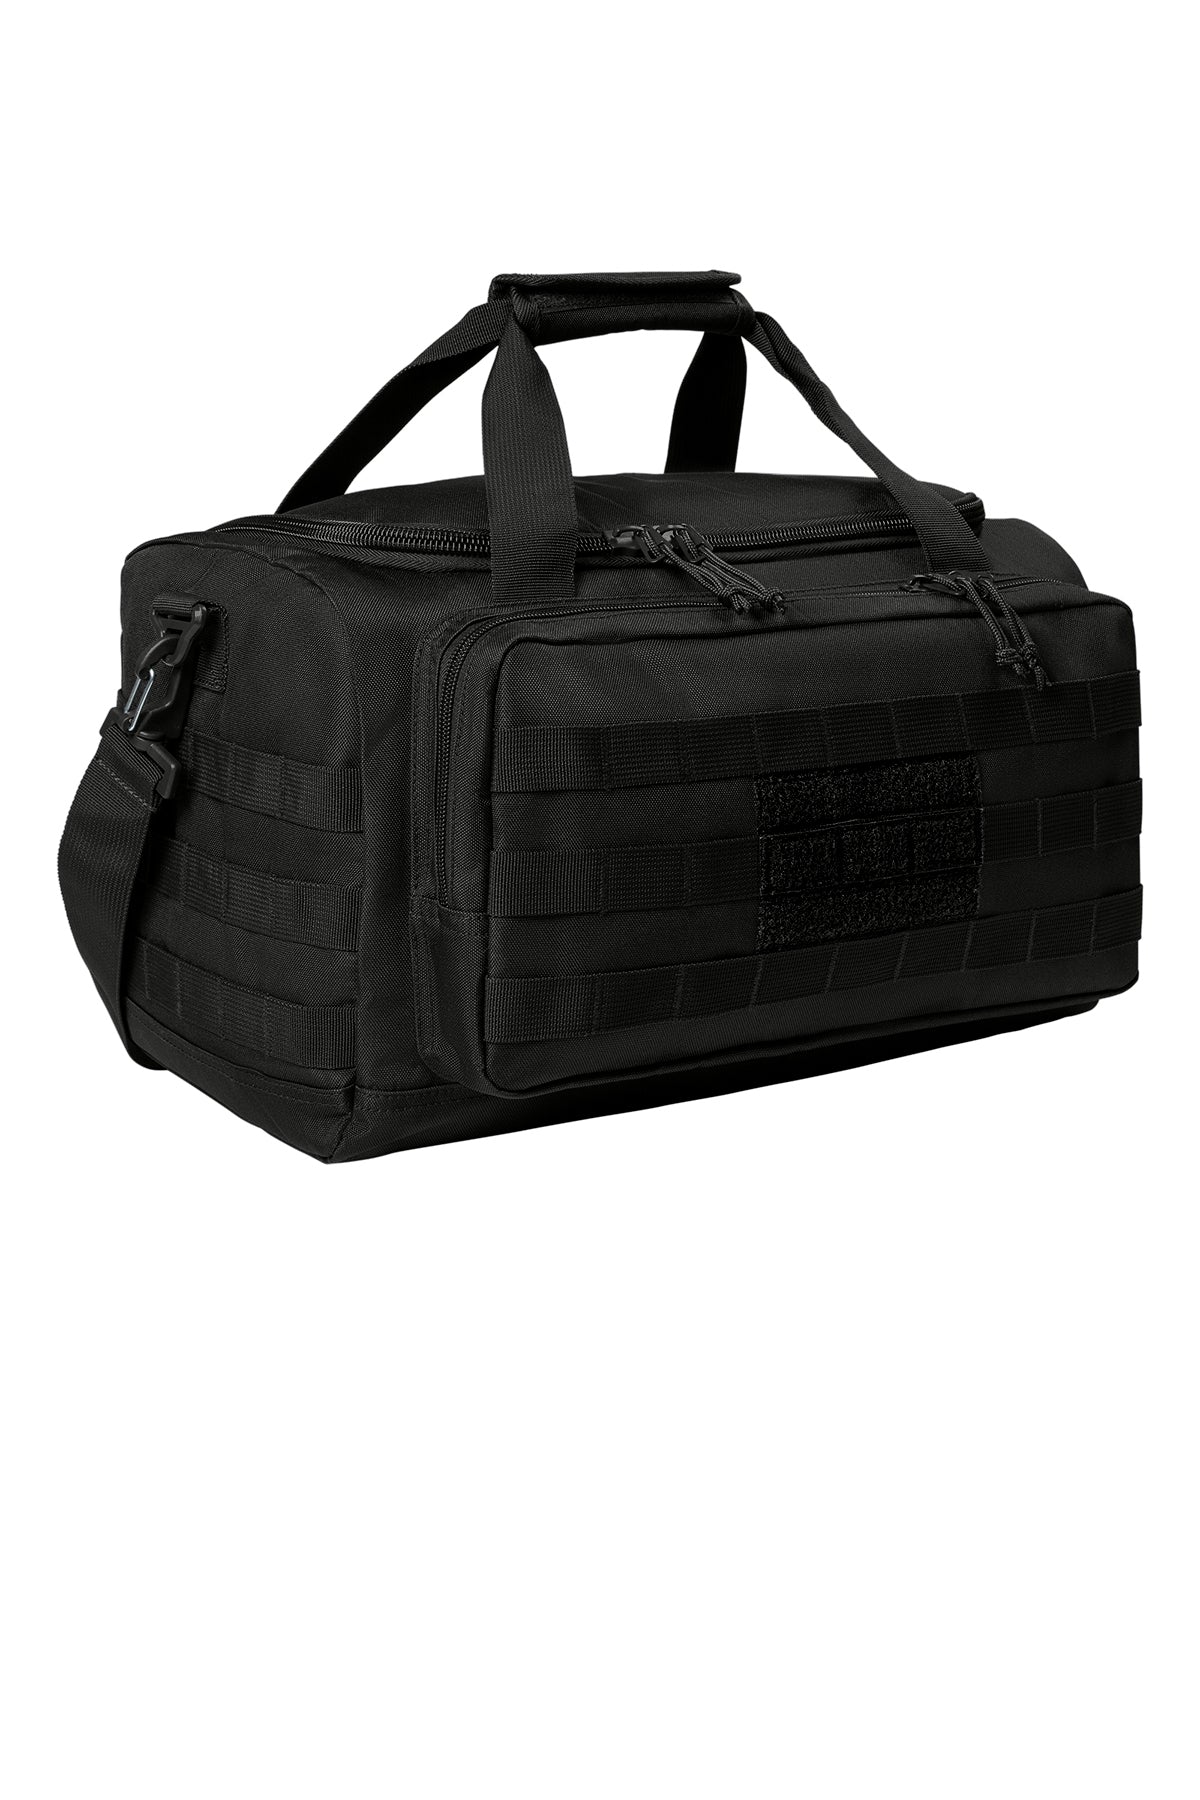 CornerStone Tactical Gear Bag